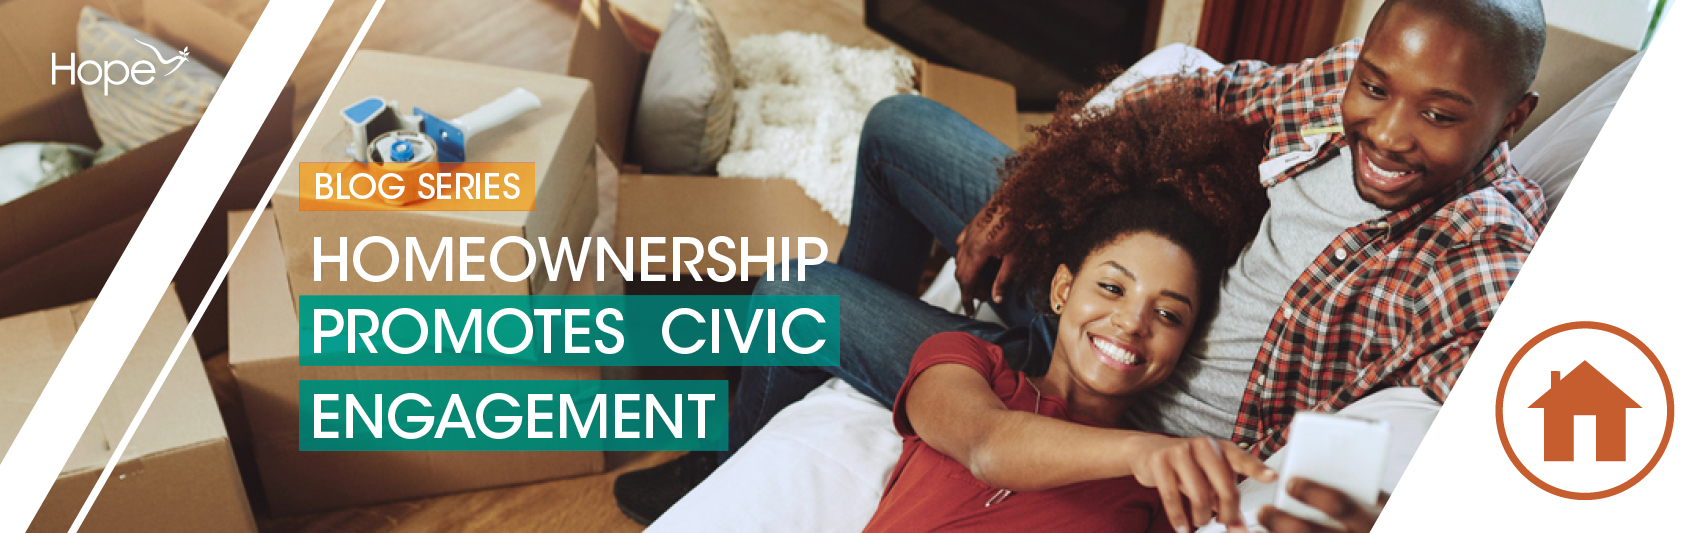 Slider_Homeownership Promotes Civic Engagement